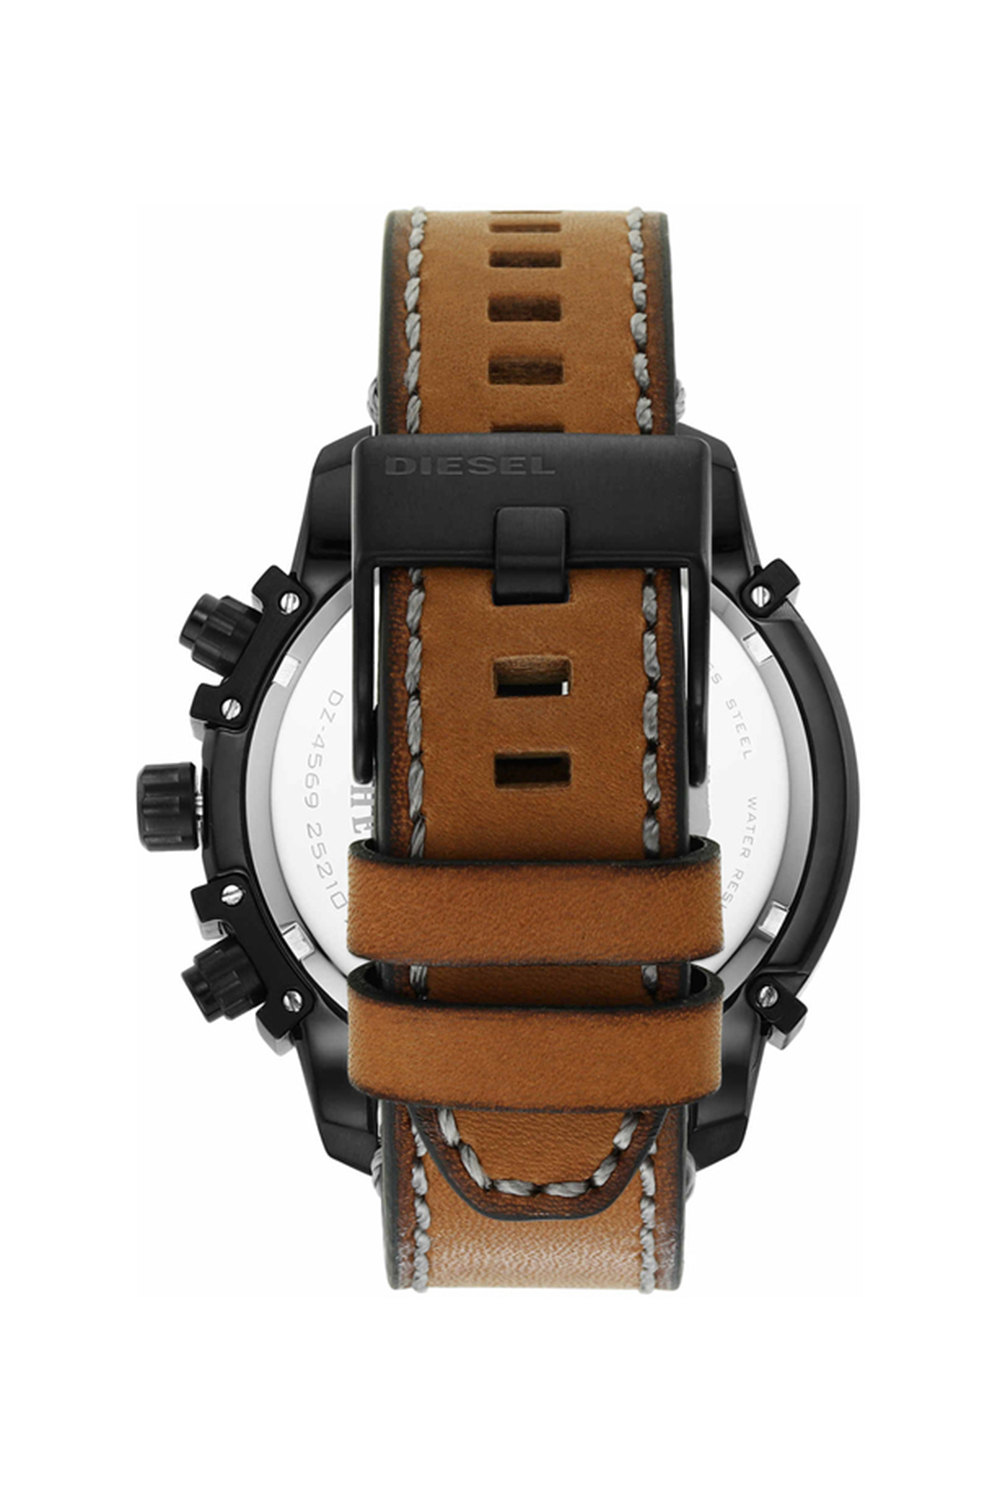 Desiel Dz4569 Griffed Leather Men'S Watch | Odel.lk